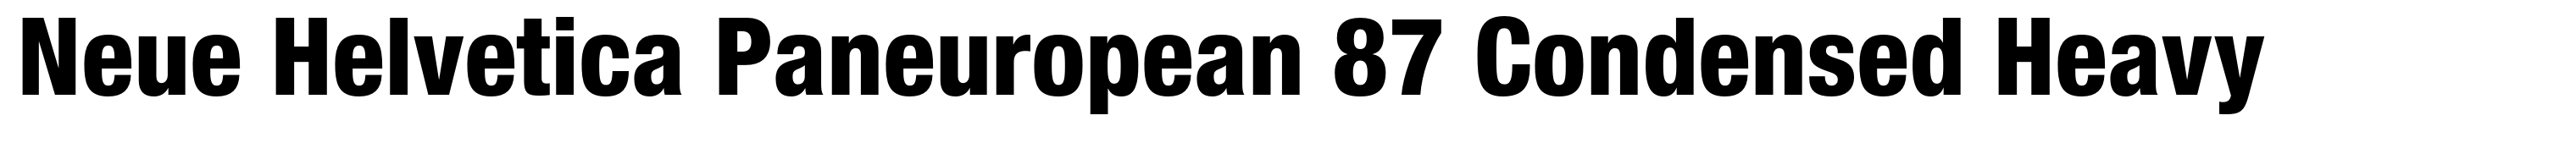 Neue Helvetica Paneuropean 87 Condensed Heavy